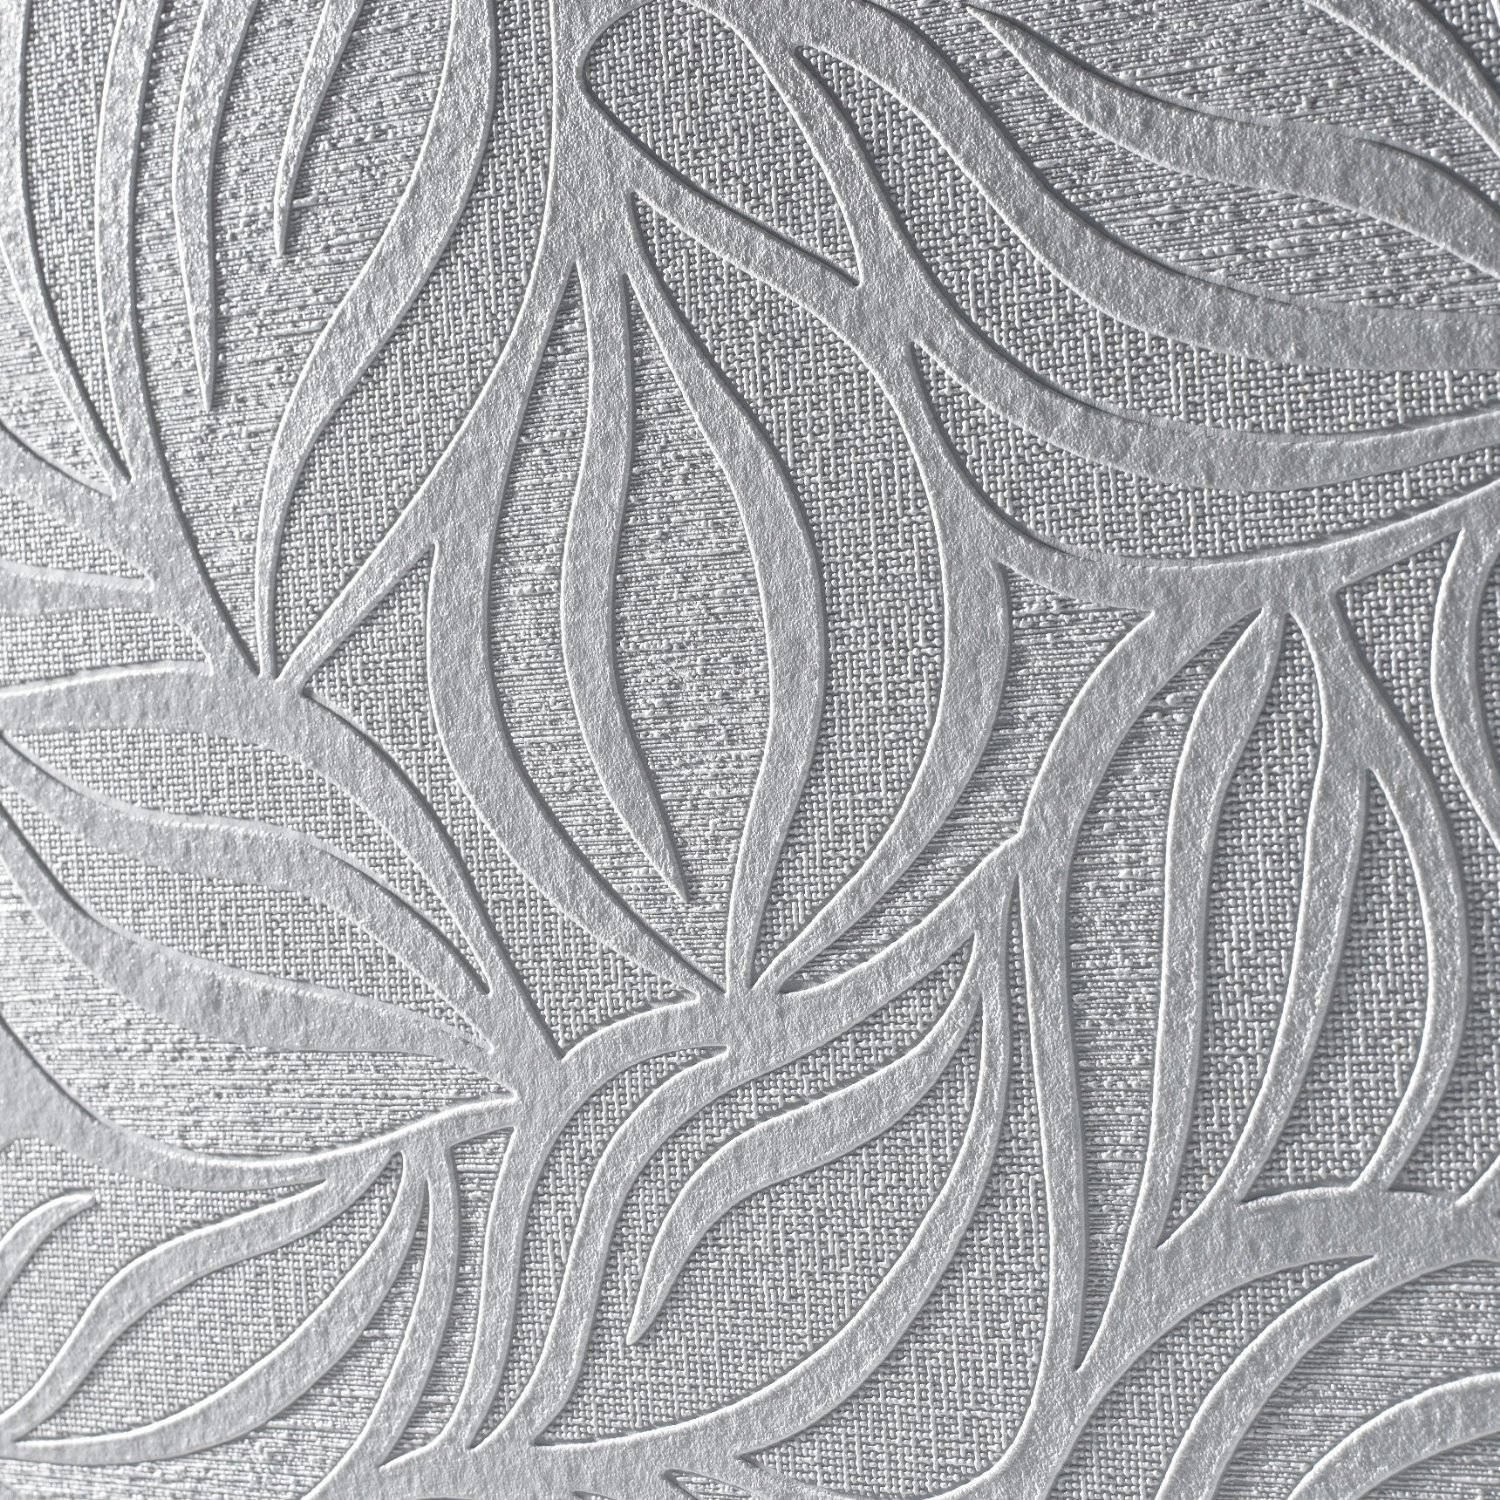 Leaf Textured Grey Wall Background